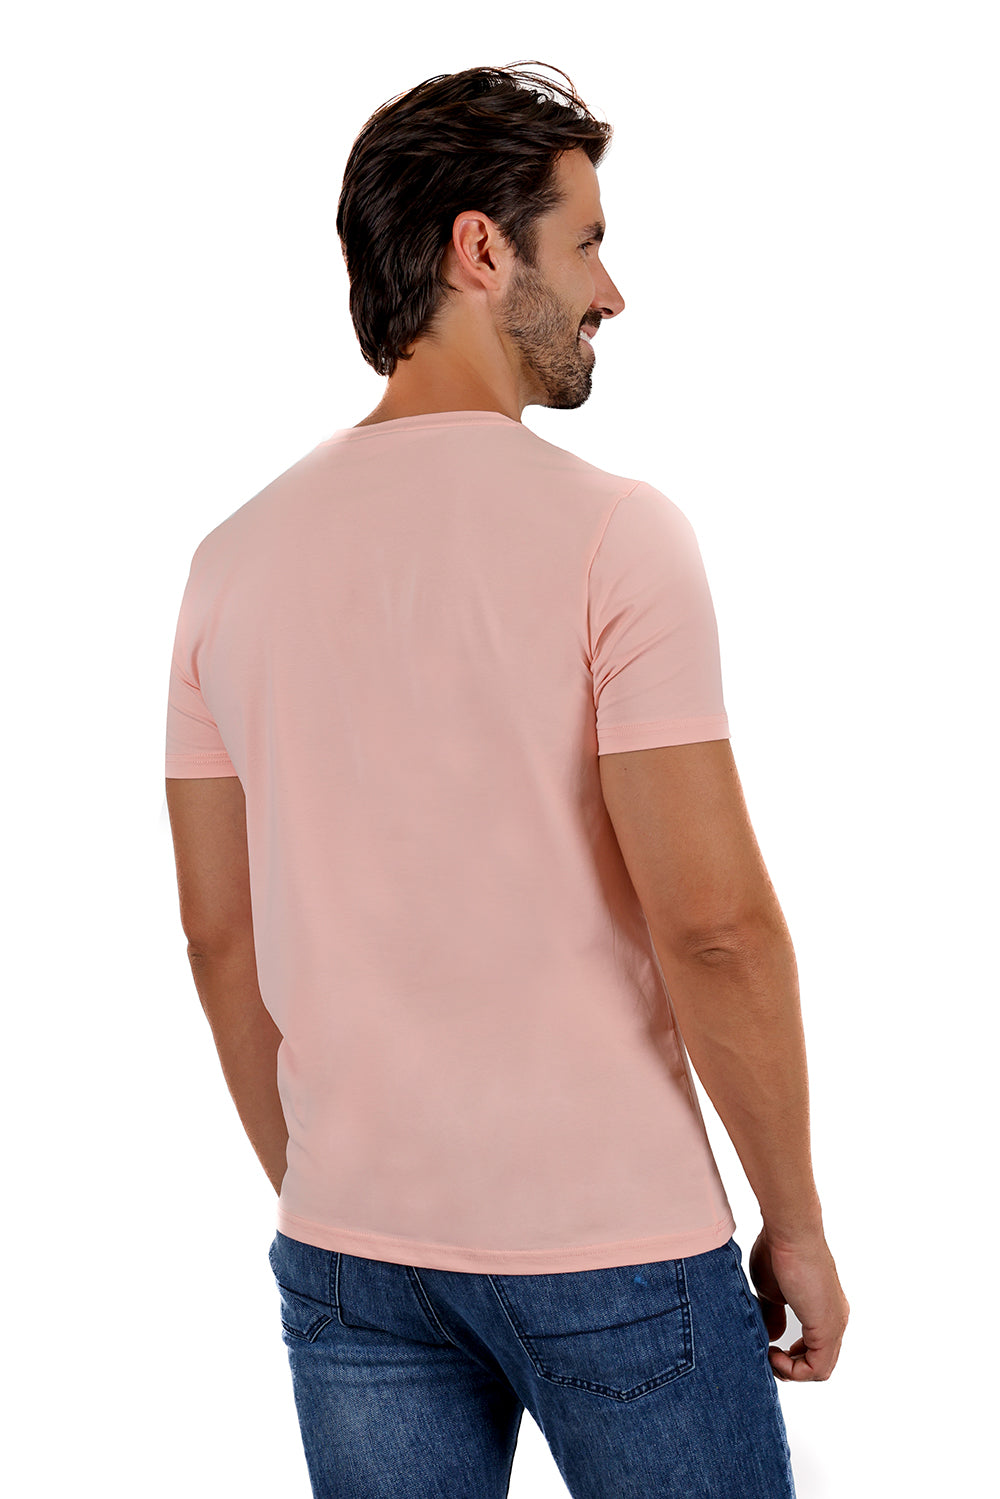 BARABAS Men's Basic Solid Color Crew-neck T-shirts ST933 Flamingo